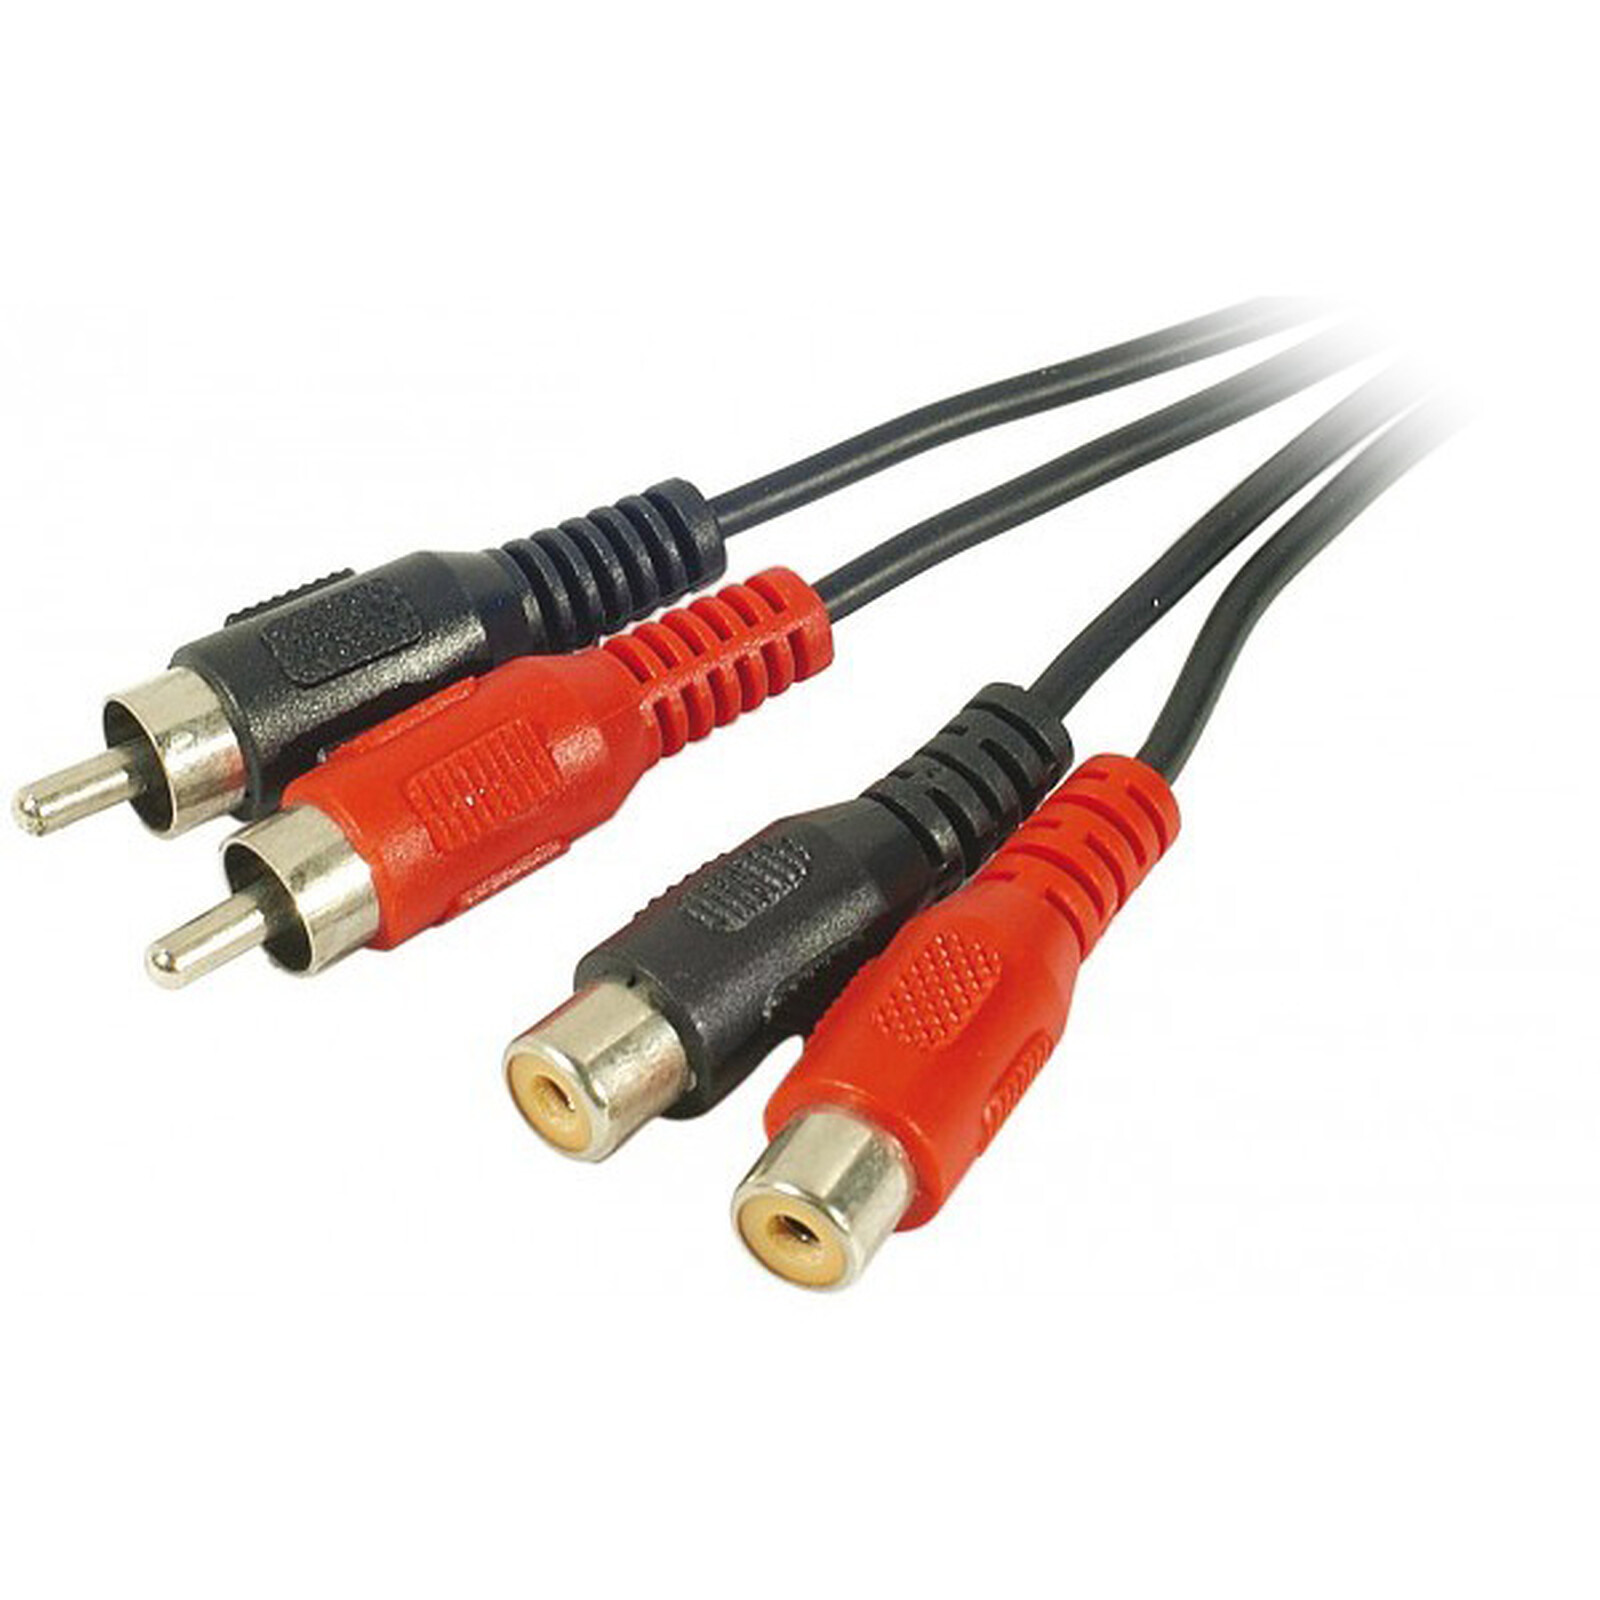 Real Cable 2RCA-1 1m - Câble audio RCA - Garantie 3 ans LDLC